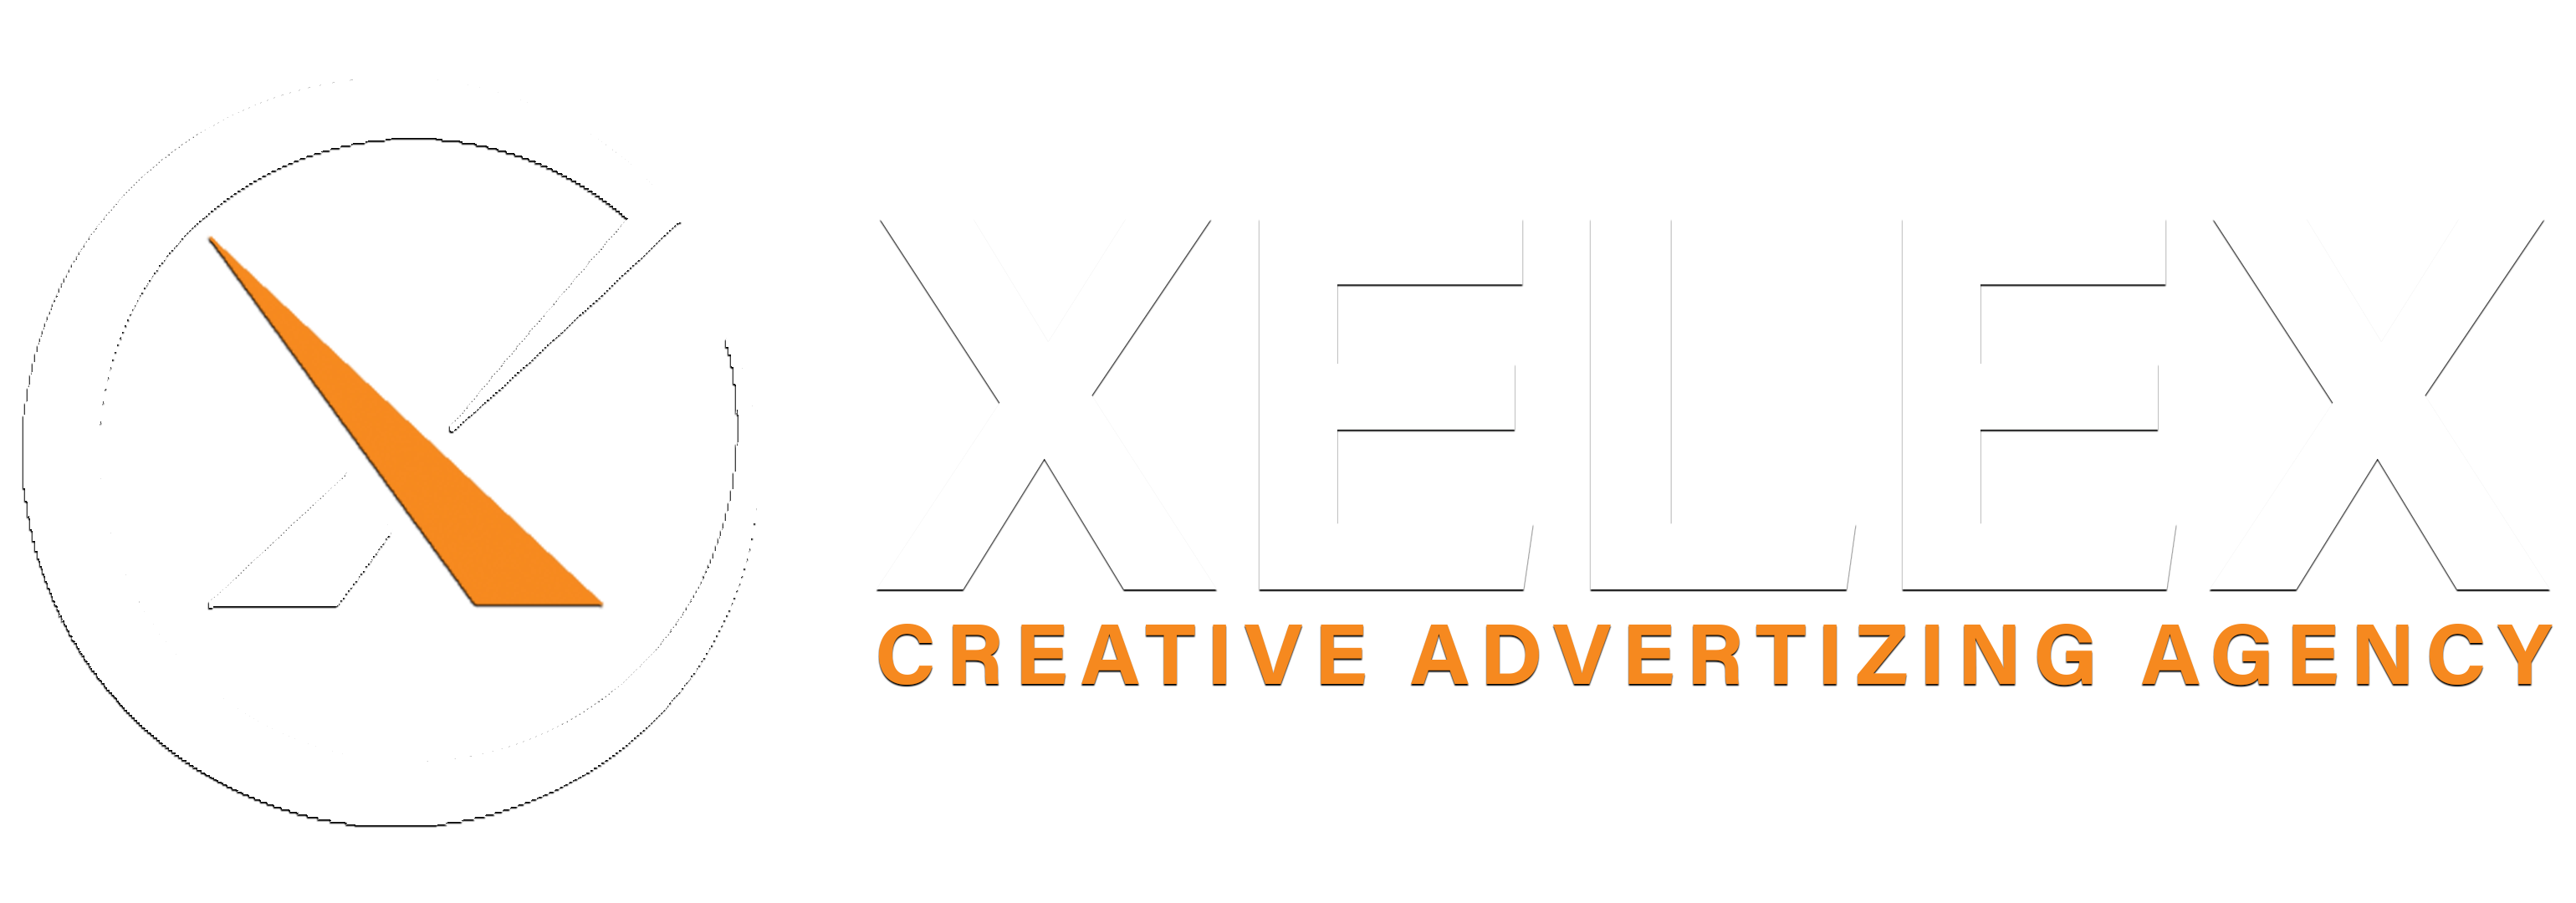 Xelex Creative Ad Agency